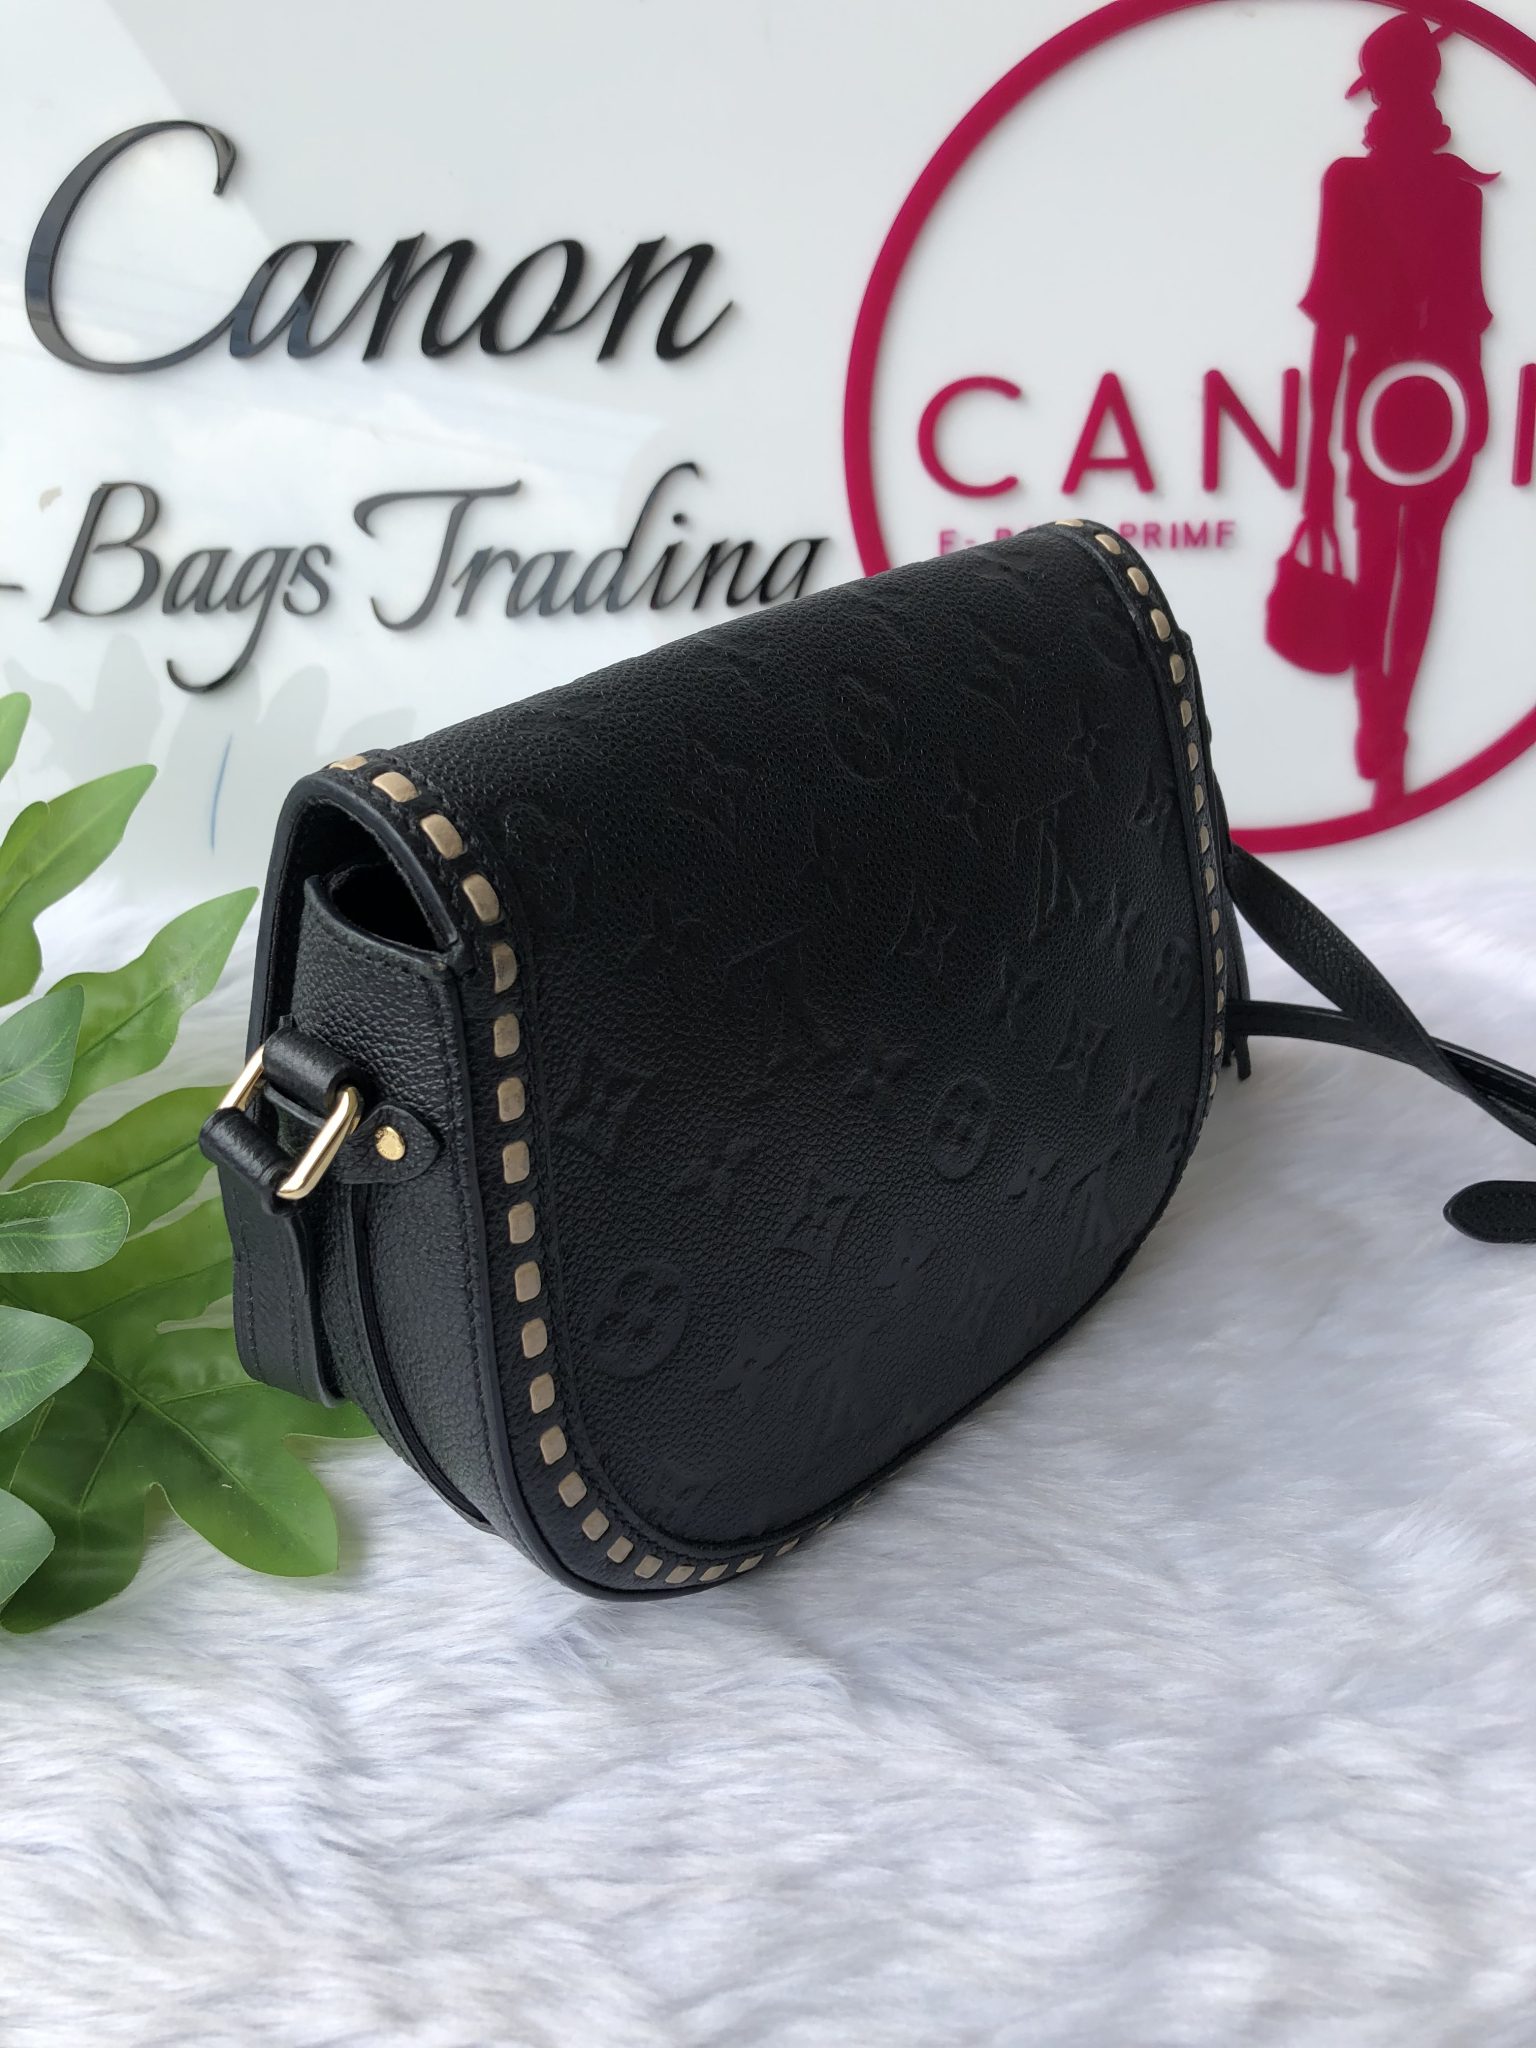 Louis Vuitton Empreinte Junot Black Shoulder Bag. Made in France. - Canon E-Bags Prime